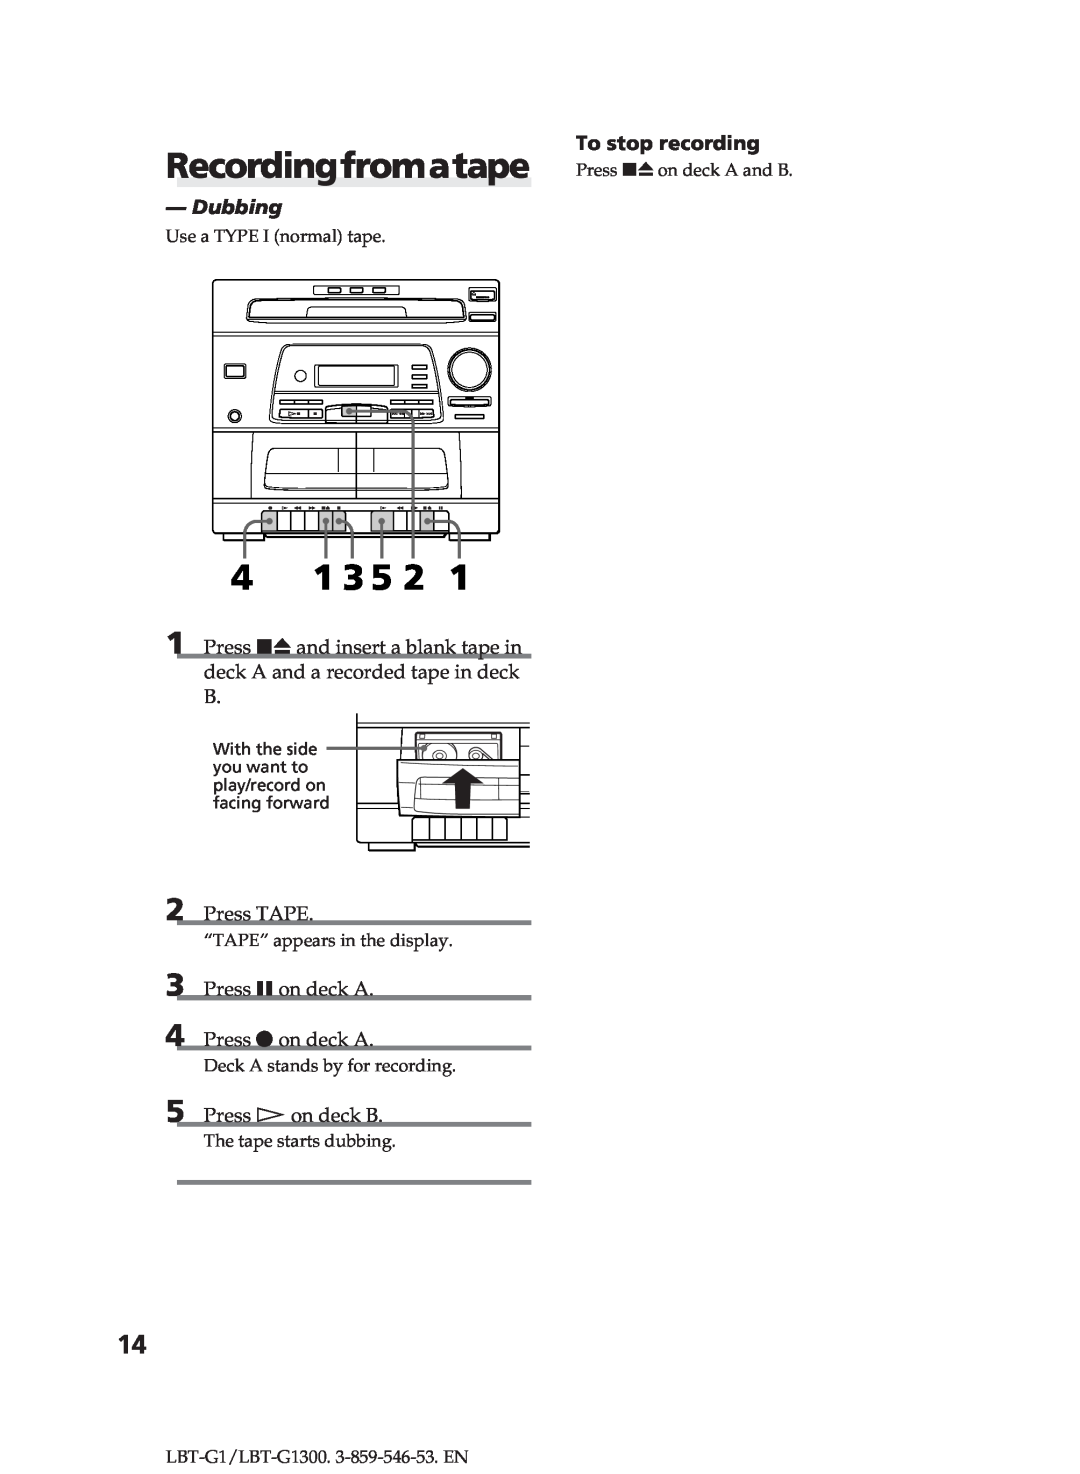 Sony LBT-G1300 manual Recordingfromatape, Dubbing, Press Pon deck A 4 Press r on deck A, Press á on deck B, Press TAPE 